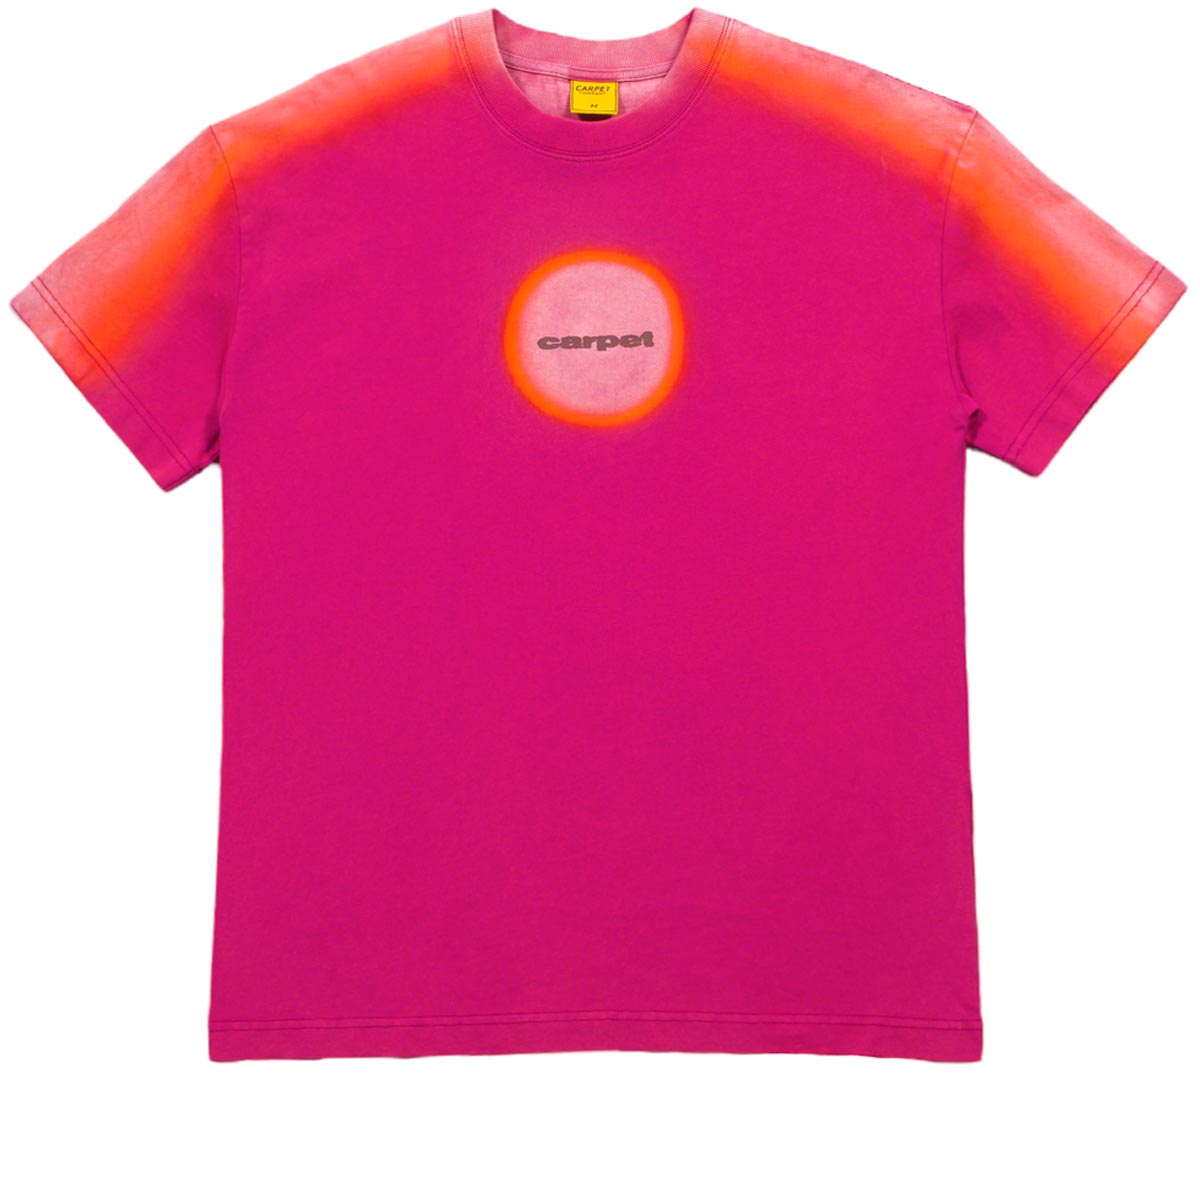 Carpet Company Sunburst T-Shirt - Pink/Orange image 1